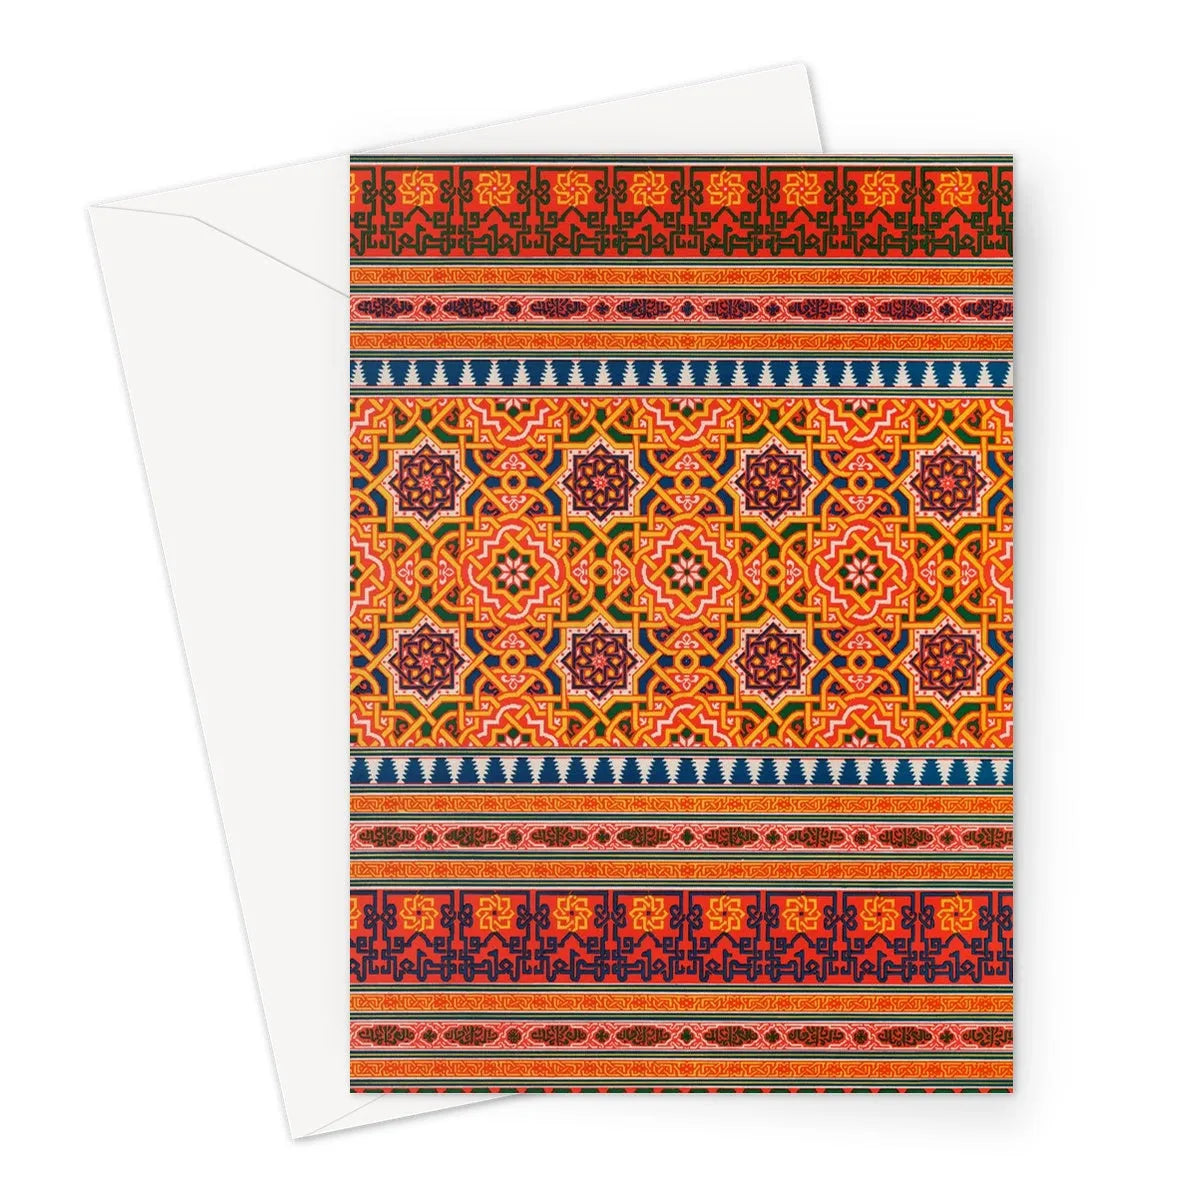 Emile Prisses D’avennes La Decoration Arabe Plate 9 + 10 Greeting Card - A5 Portrait / 1 Card - Notebooks & Notepads